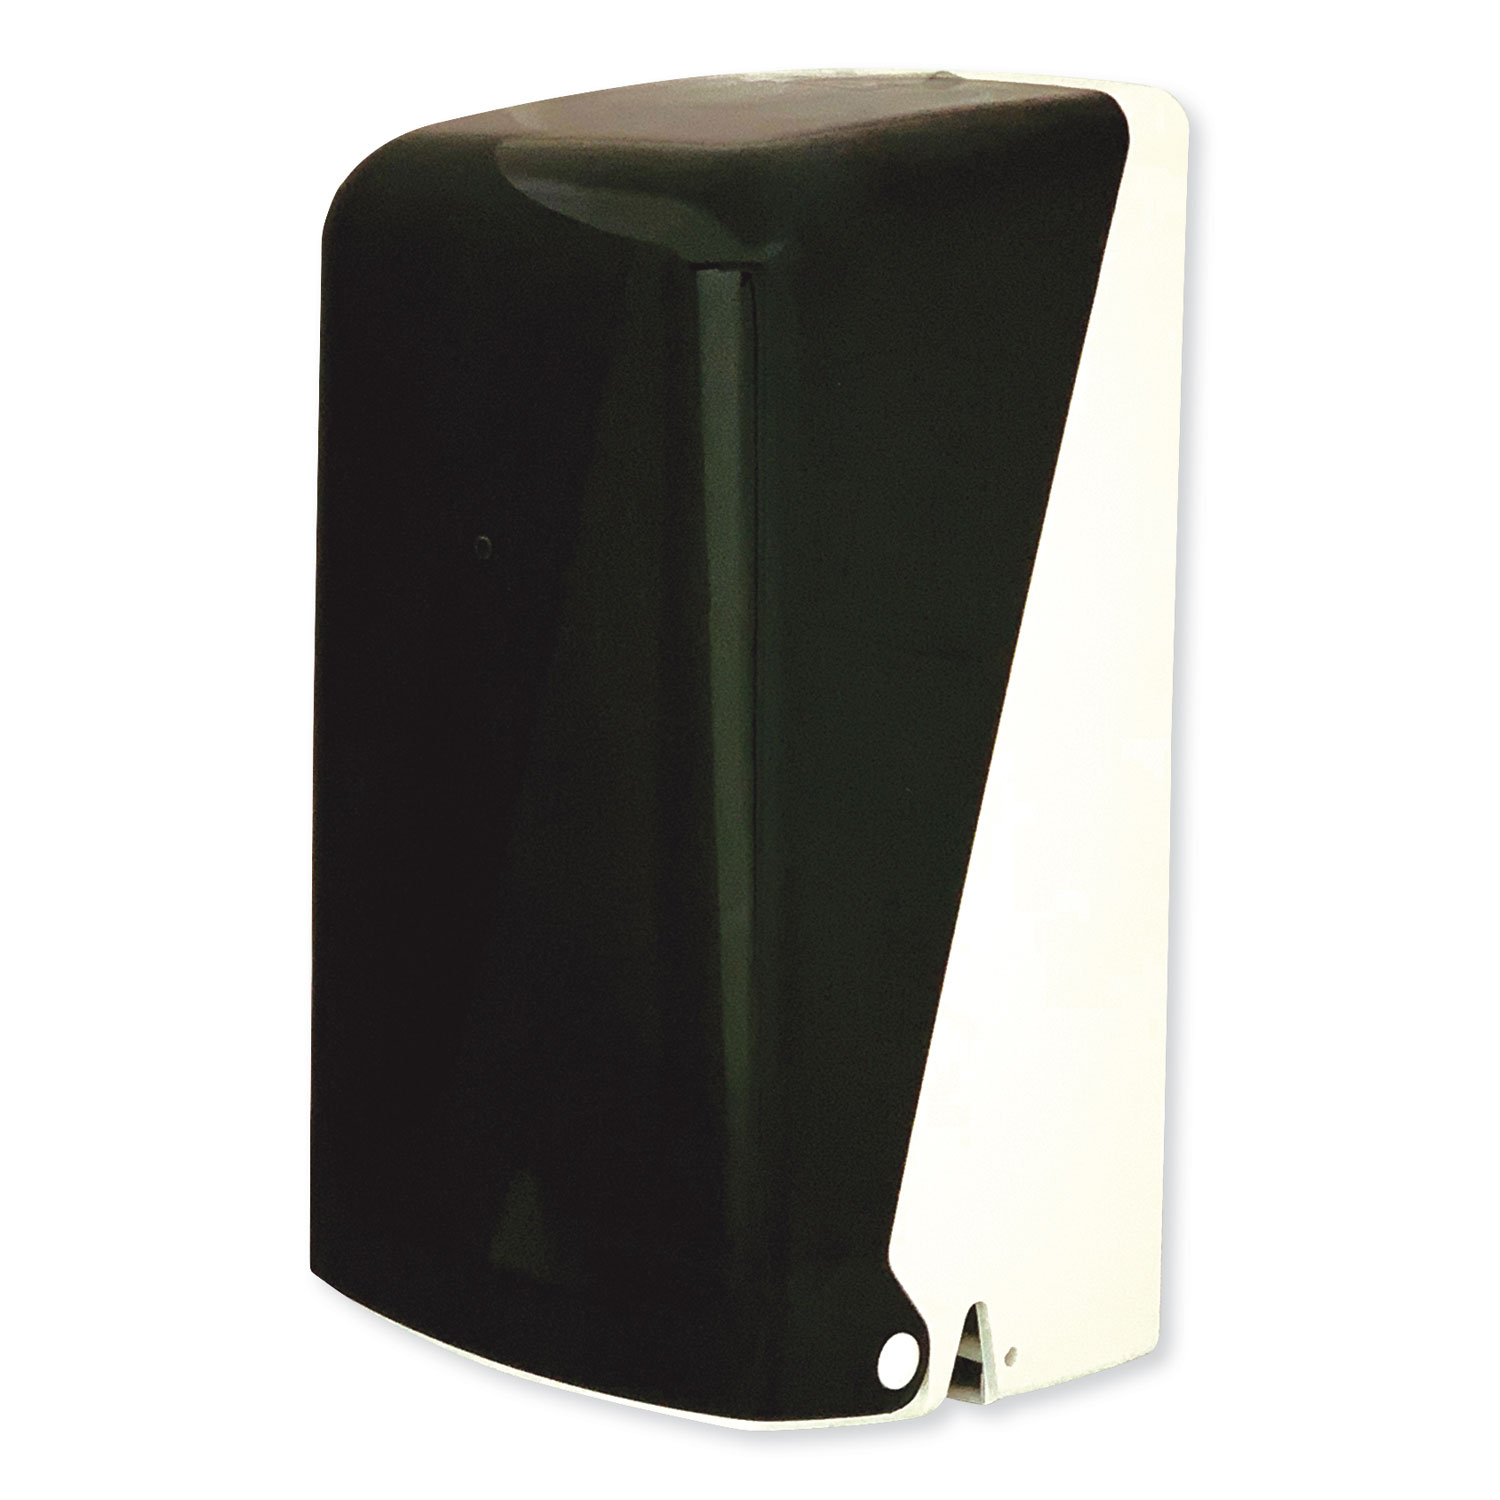  GEN AF51400 Two Roll Household Bath Tissue Dispenser, 5.51 x 5.59 x 11.42, Smoke (GEN1604) 